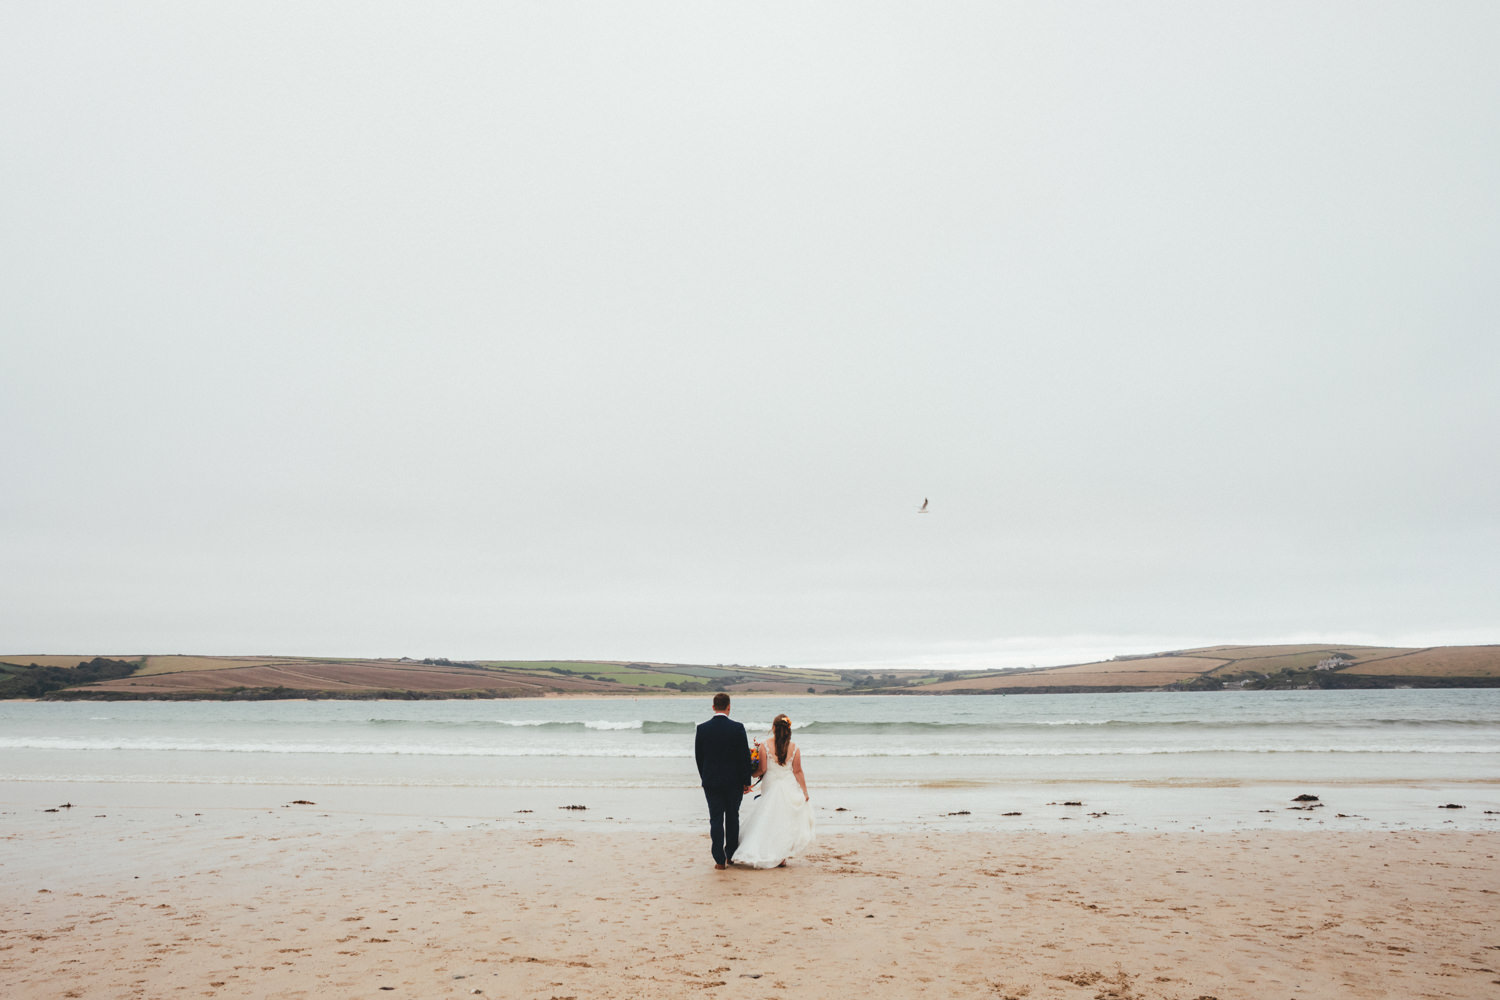 Daymer Bay, Cornwall wedding, beach wedding, bride and groom, wedding photographer Cornwall